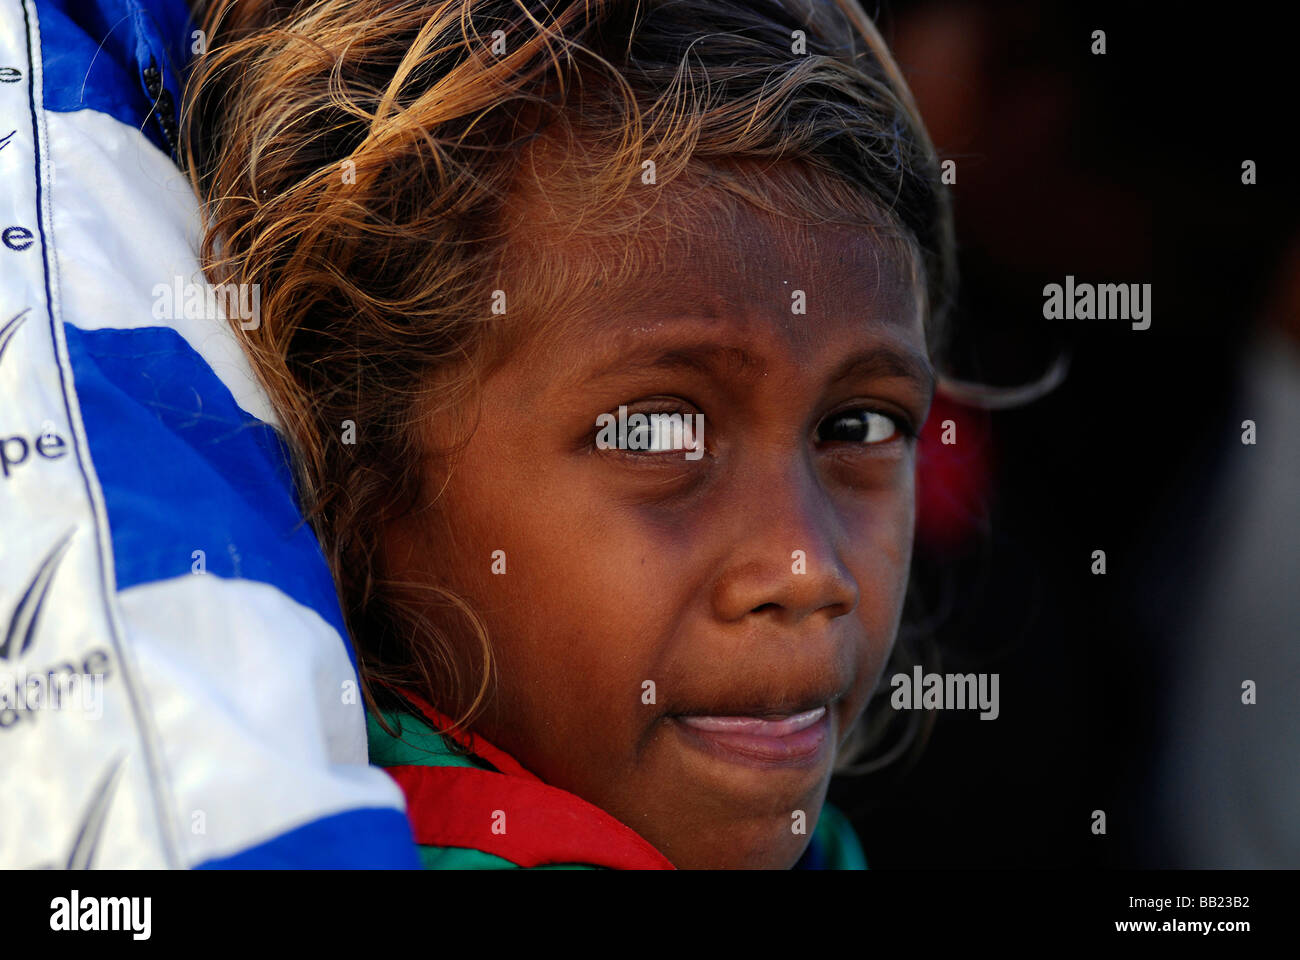 52 Best Photos Solomon Islands Blond Hair Melanesian Girl With Blond Hair Sunewendelboe Com